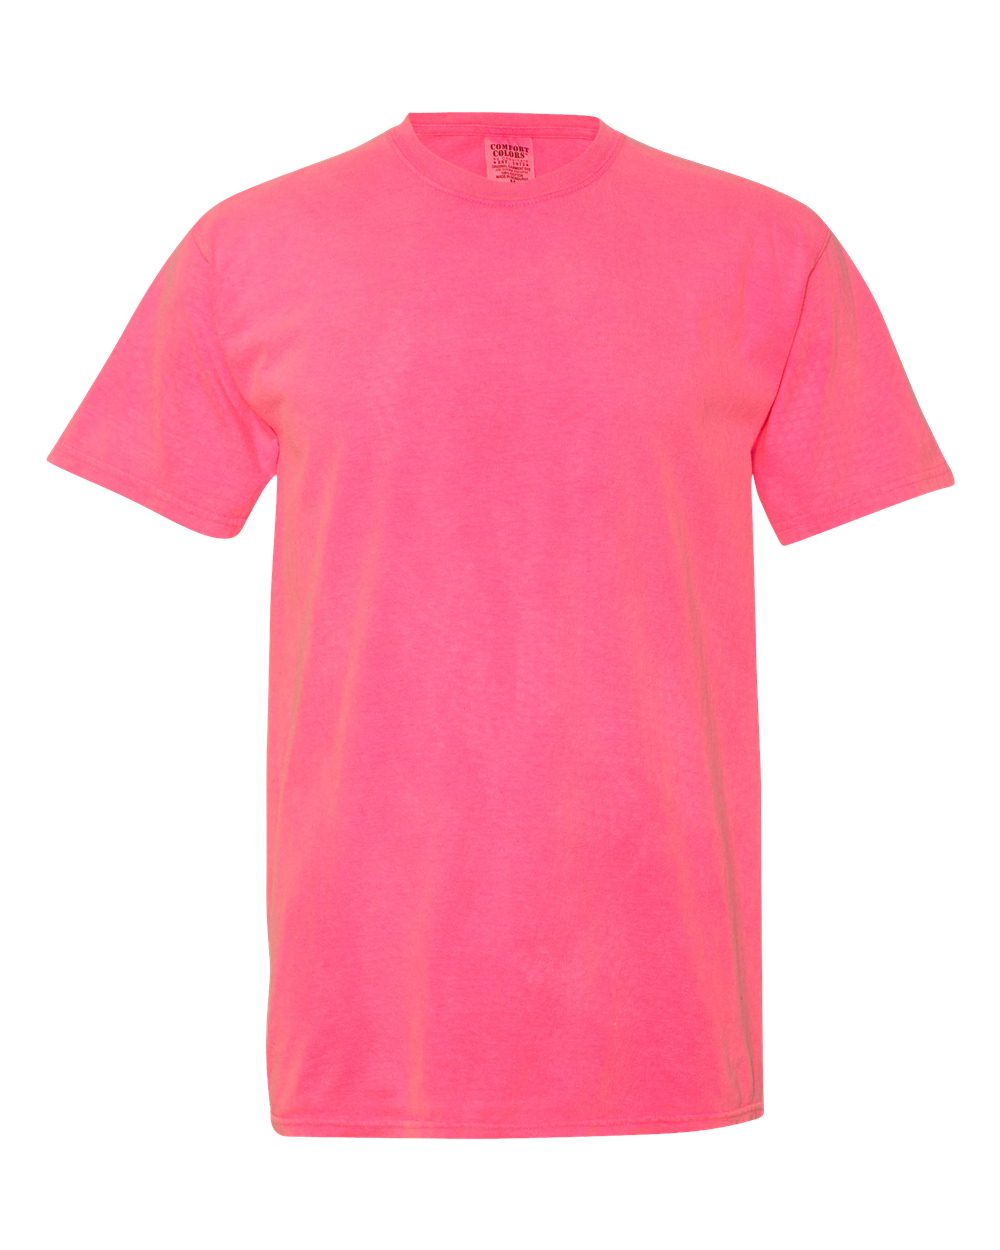 "Build A Tee" Neon - Comfort Colors Blank Short Sleeve T-Shirt